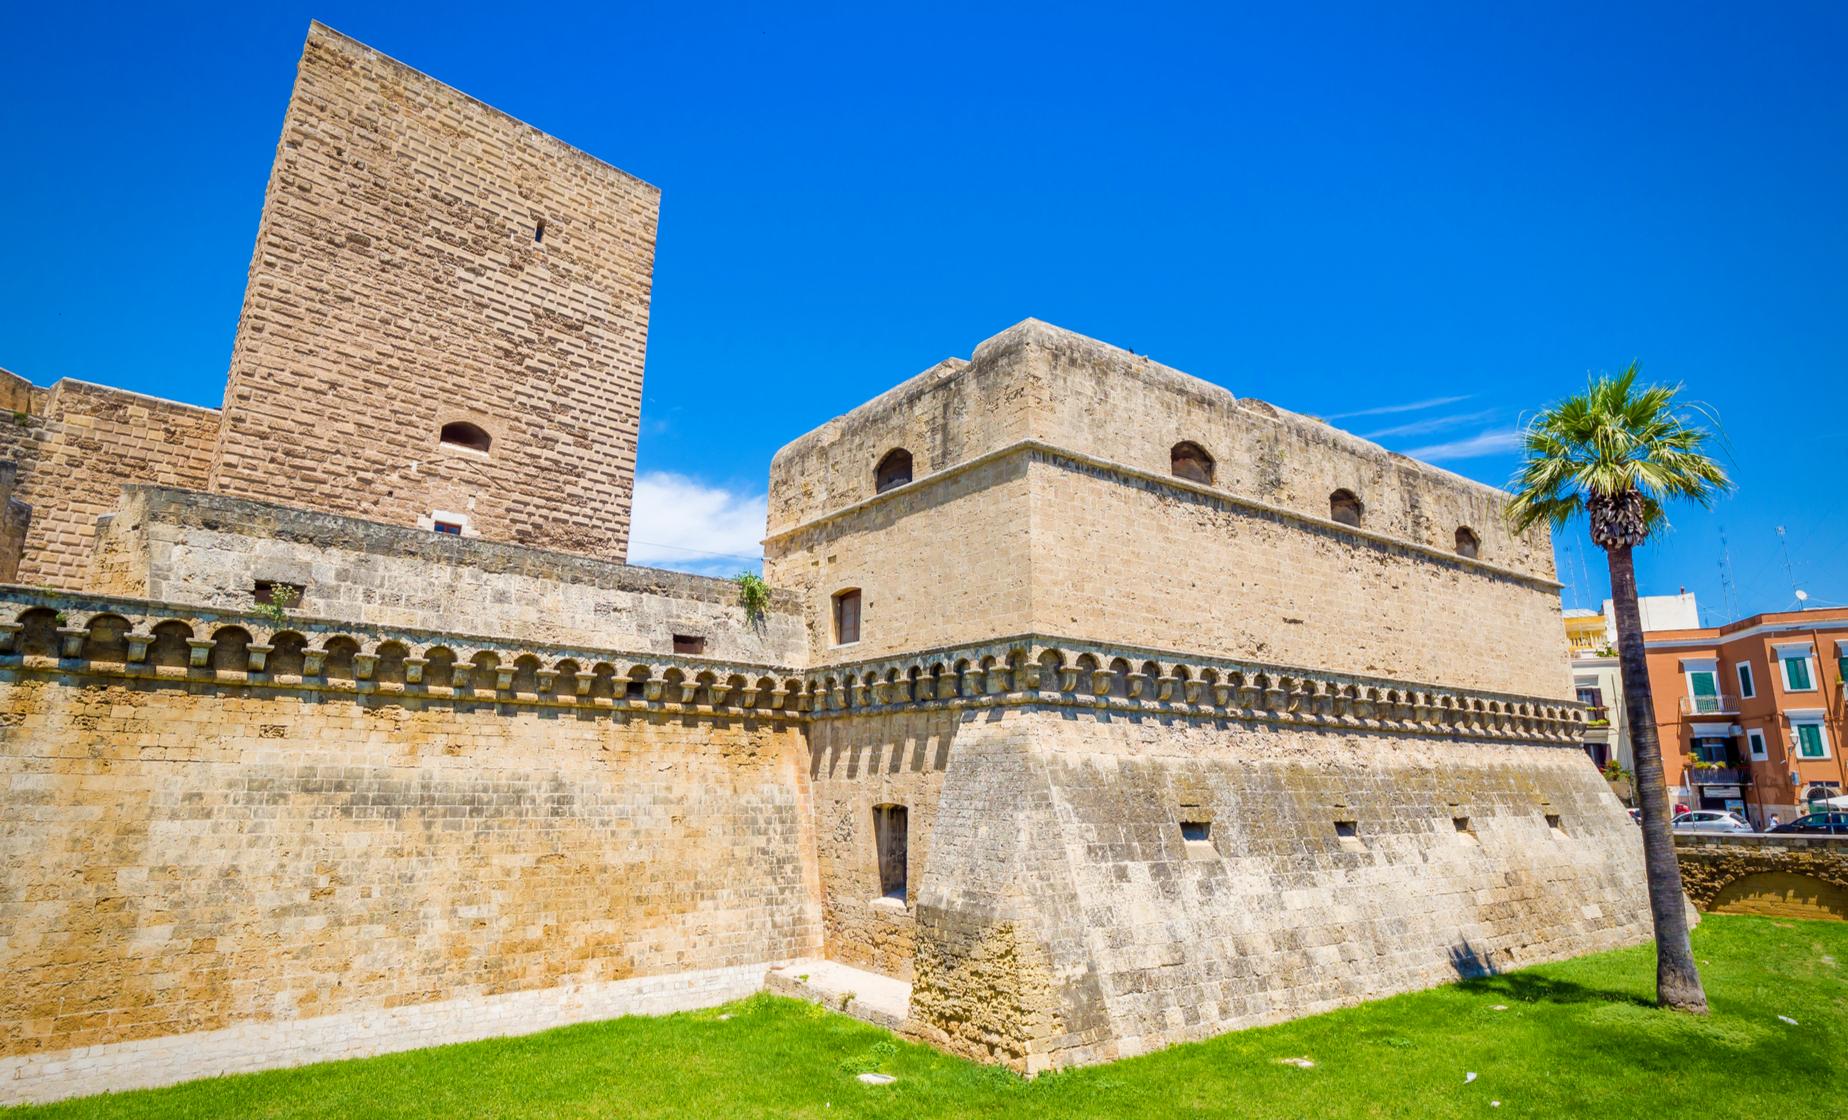 Historical Bari